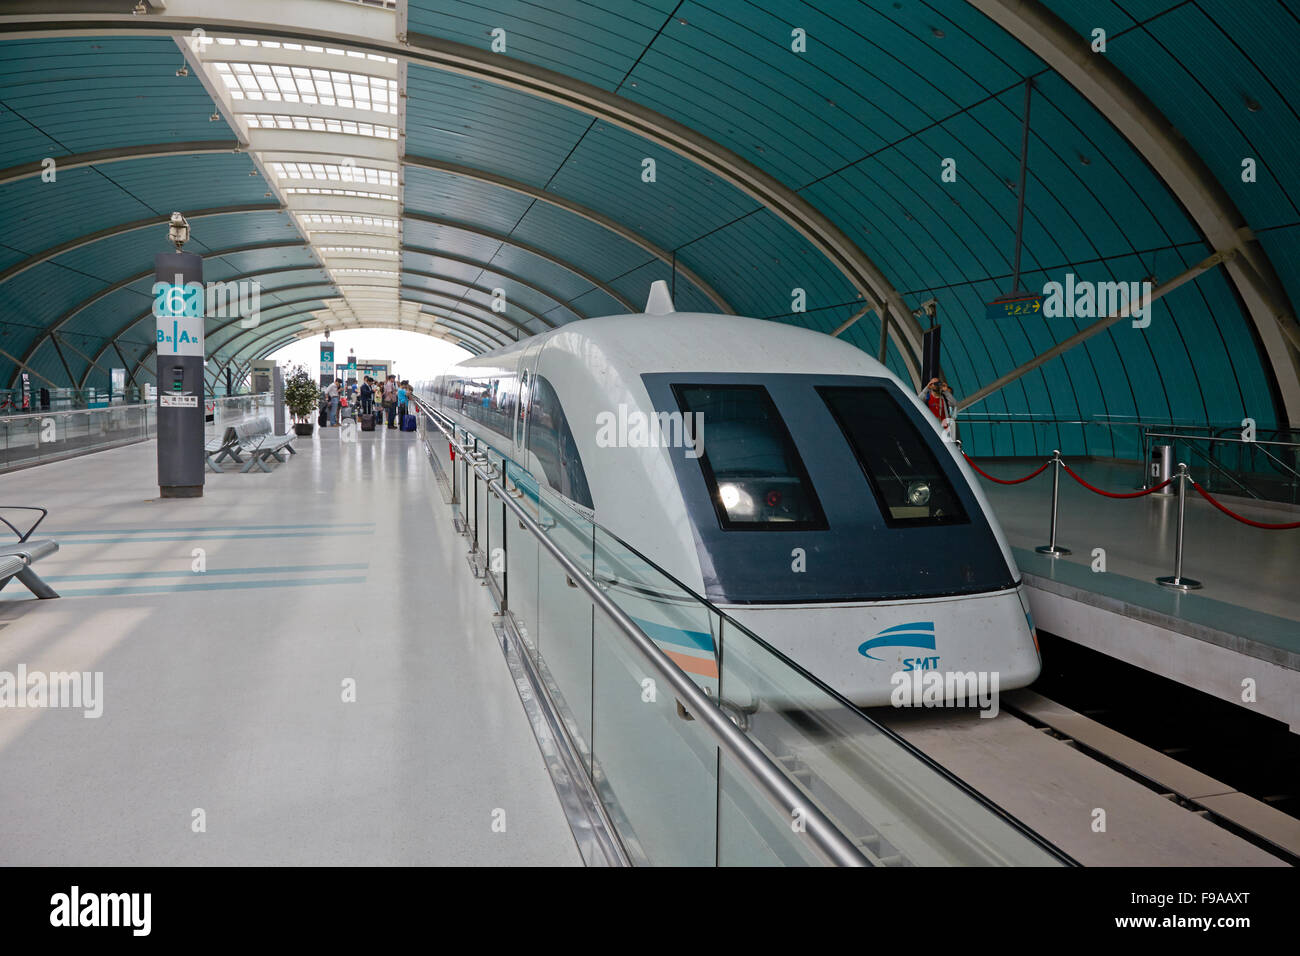 Trans-rápido tren estación de Shanghai, China Foto de stock